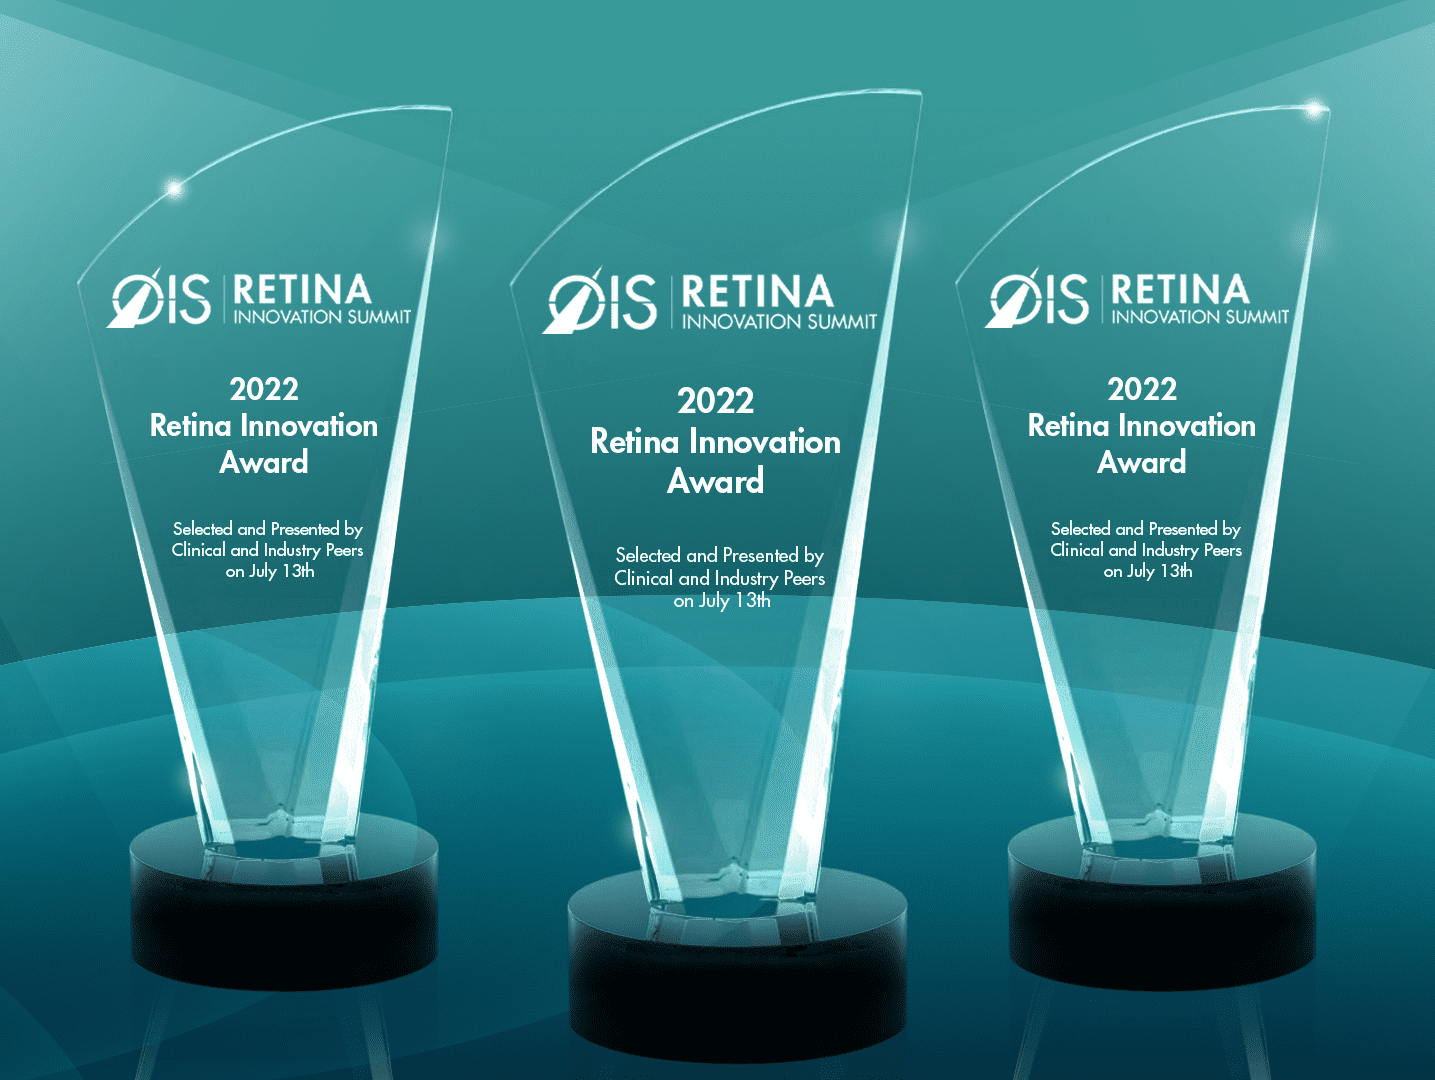 OIS Retina 2022 Innovation Award